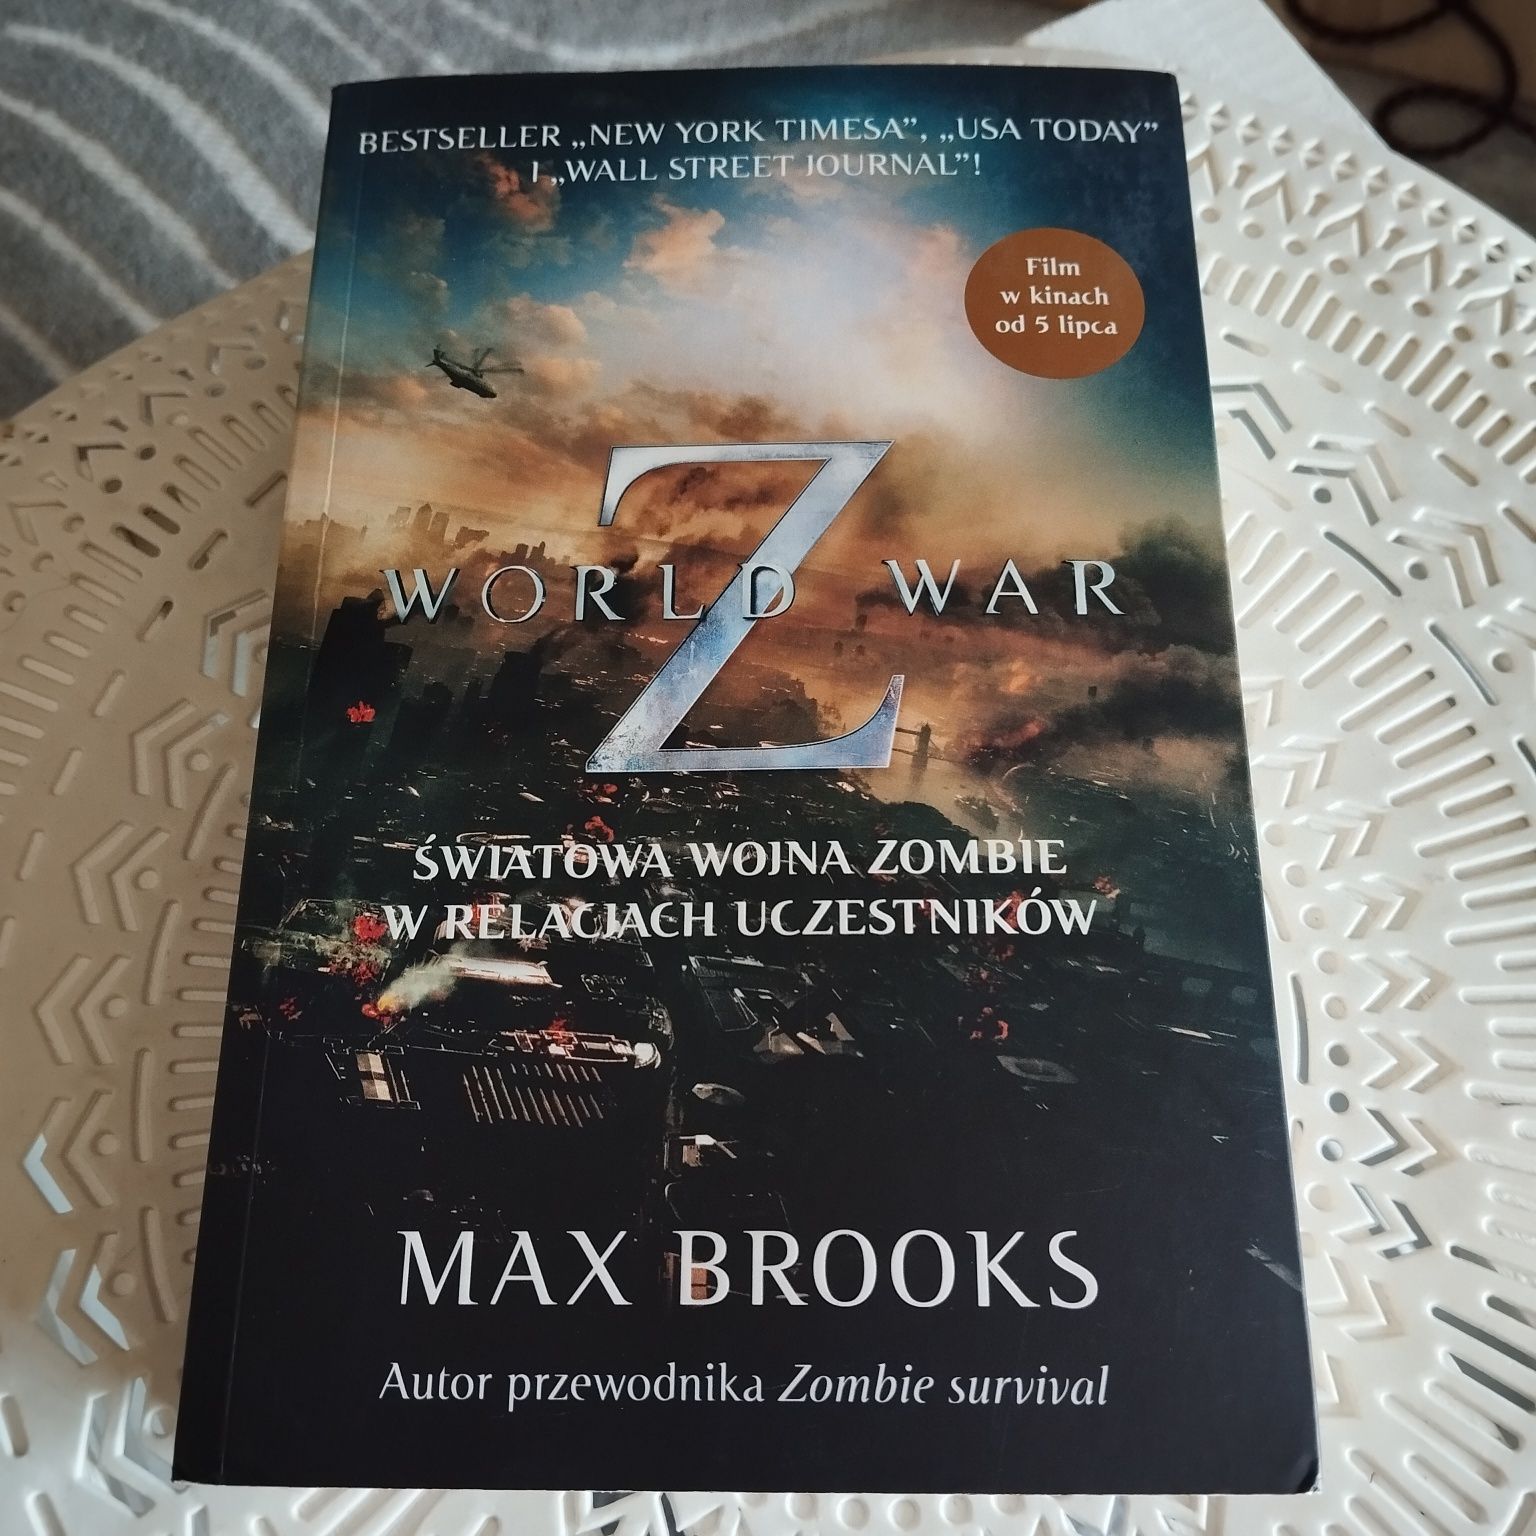 World War Z Max Brooks